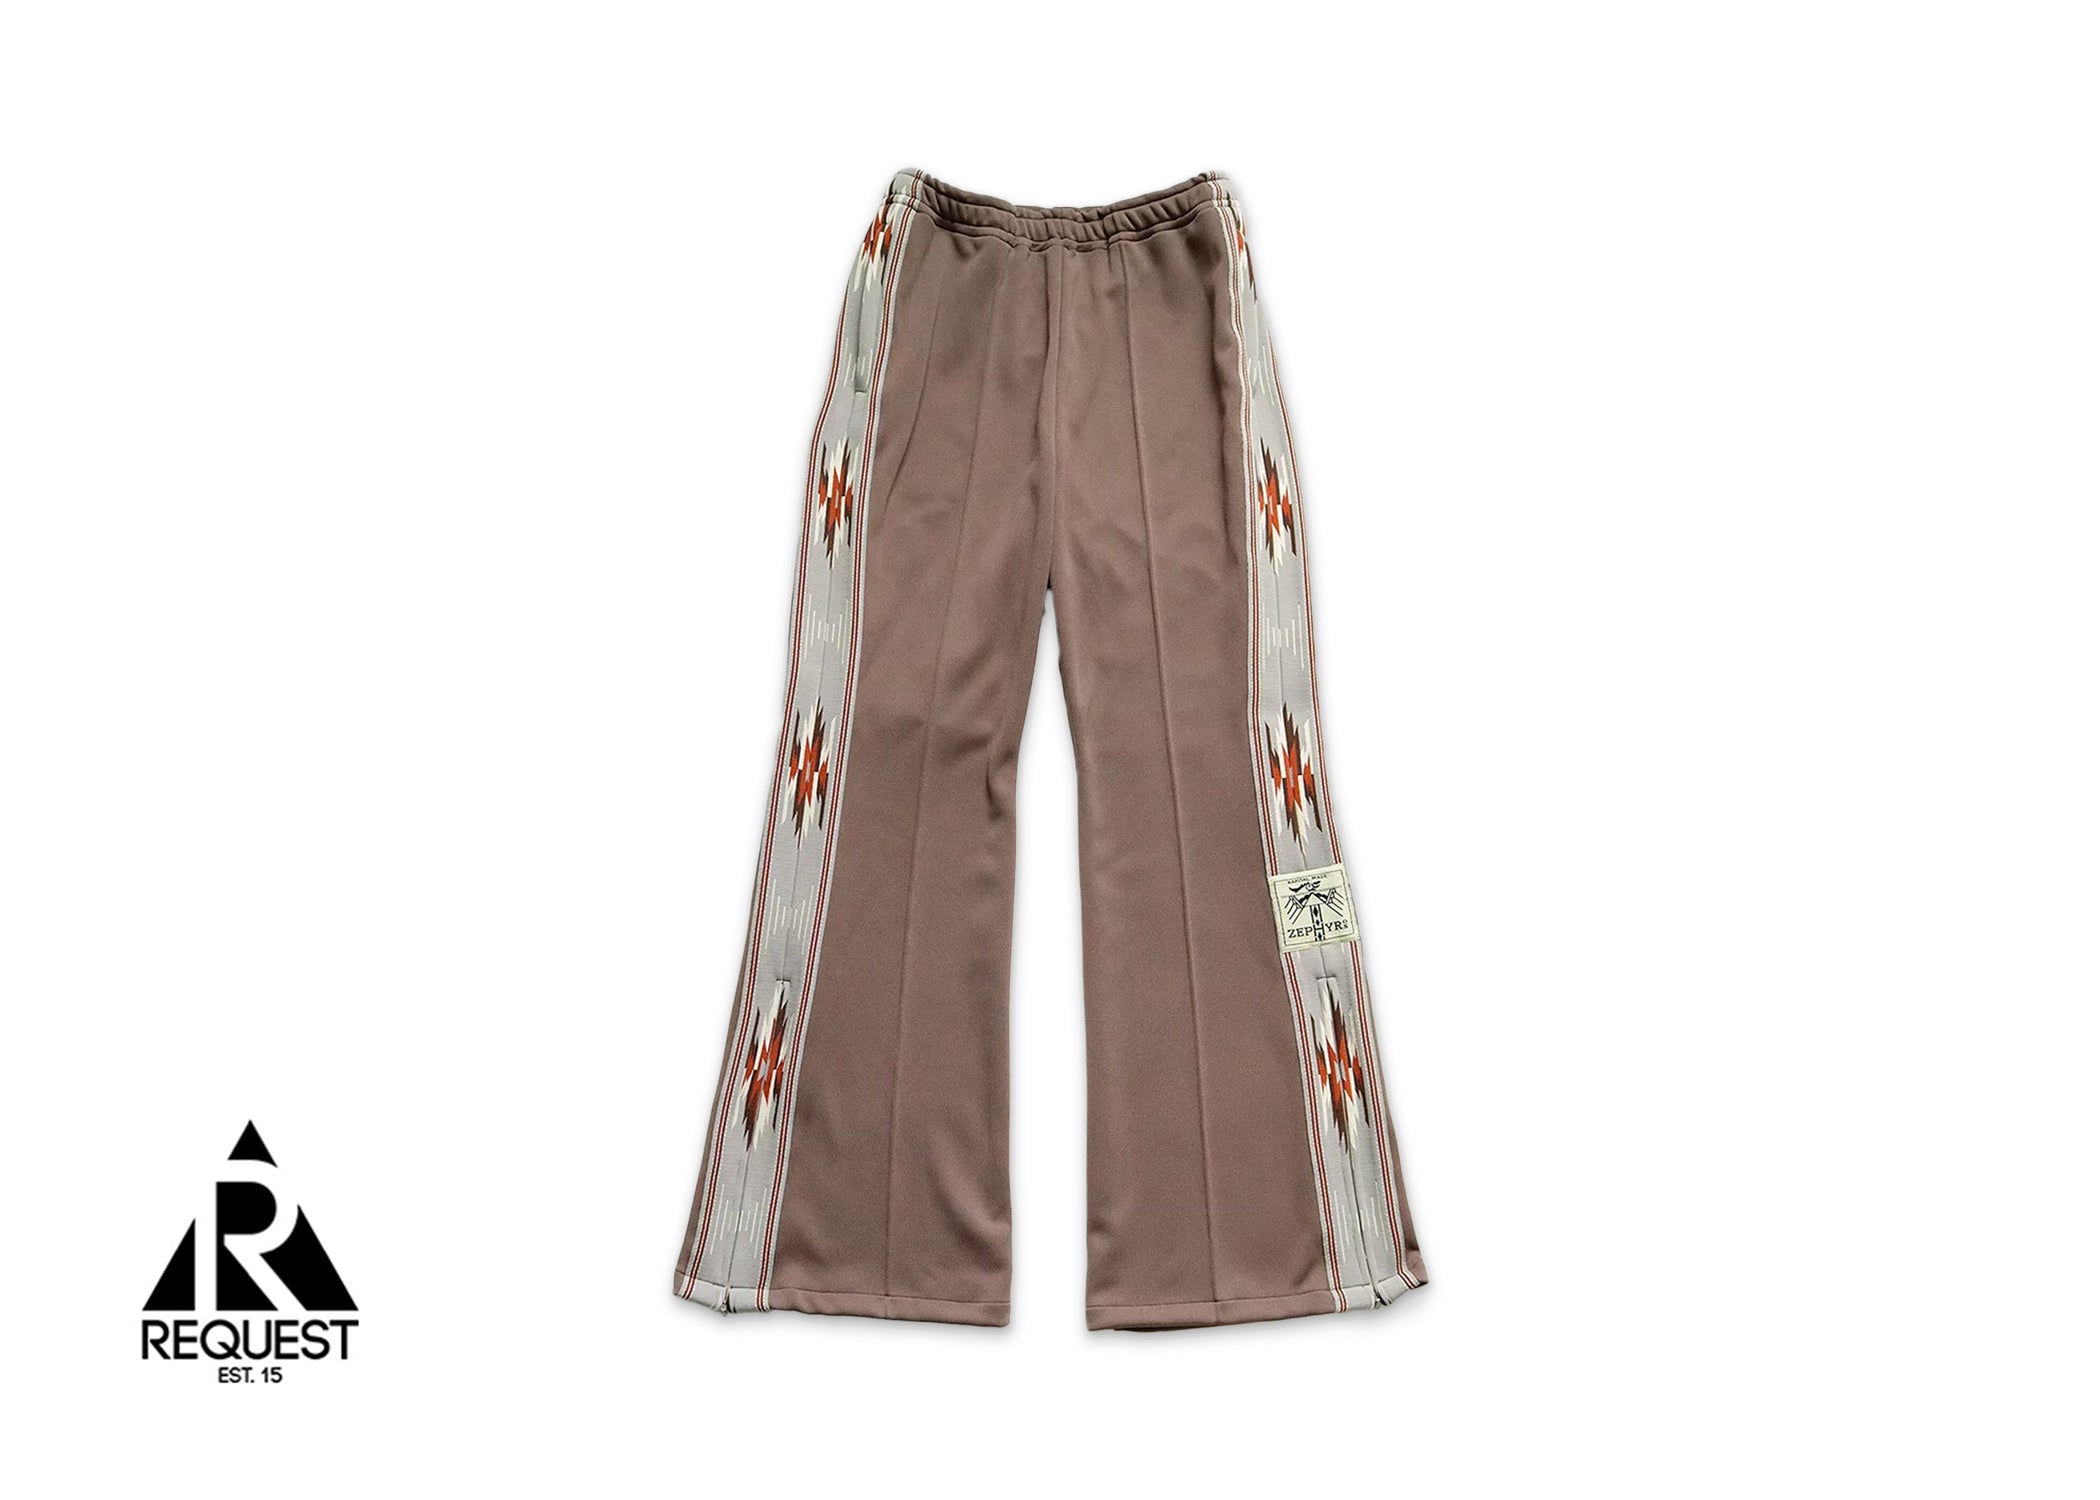 Kapital Smooth Jersey Kochi & Zephyr Sideline Track Pants "Brown/Grey/Red"